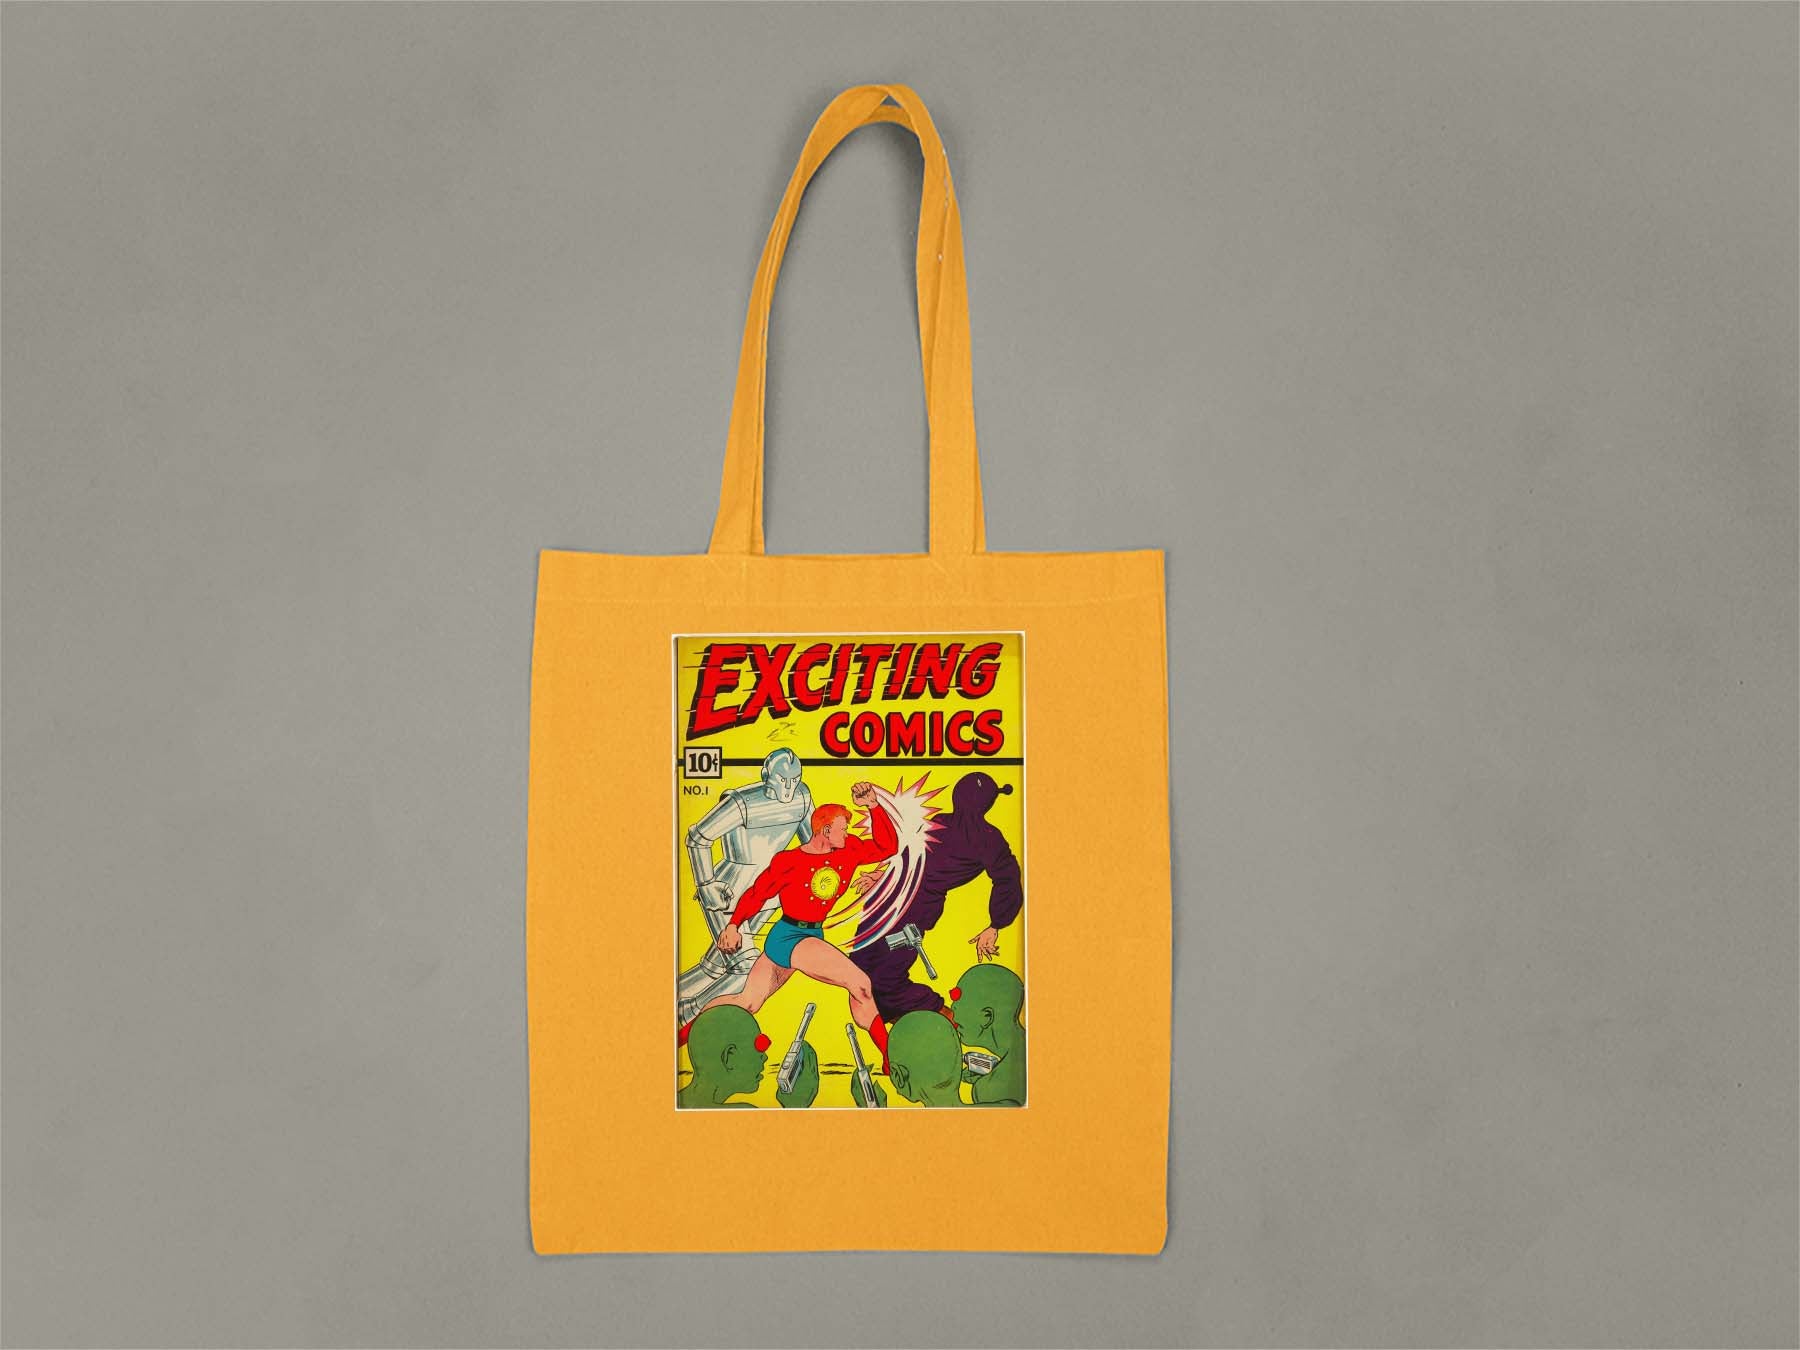 Exciting Comics No.1 Tote Bag  Gold